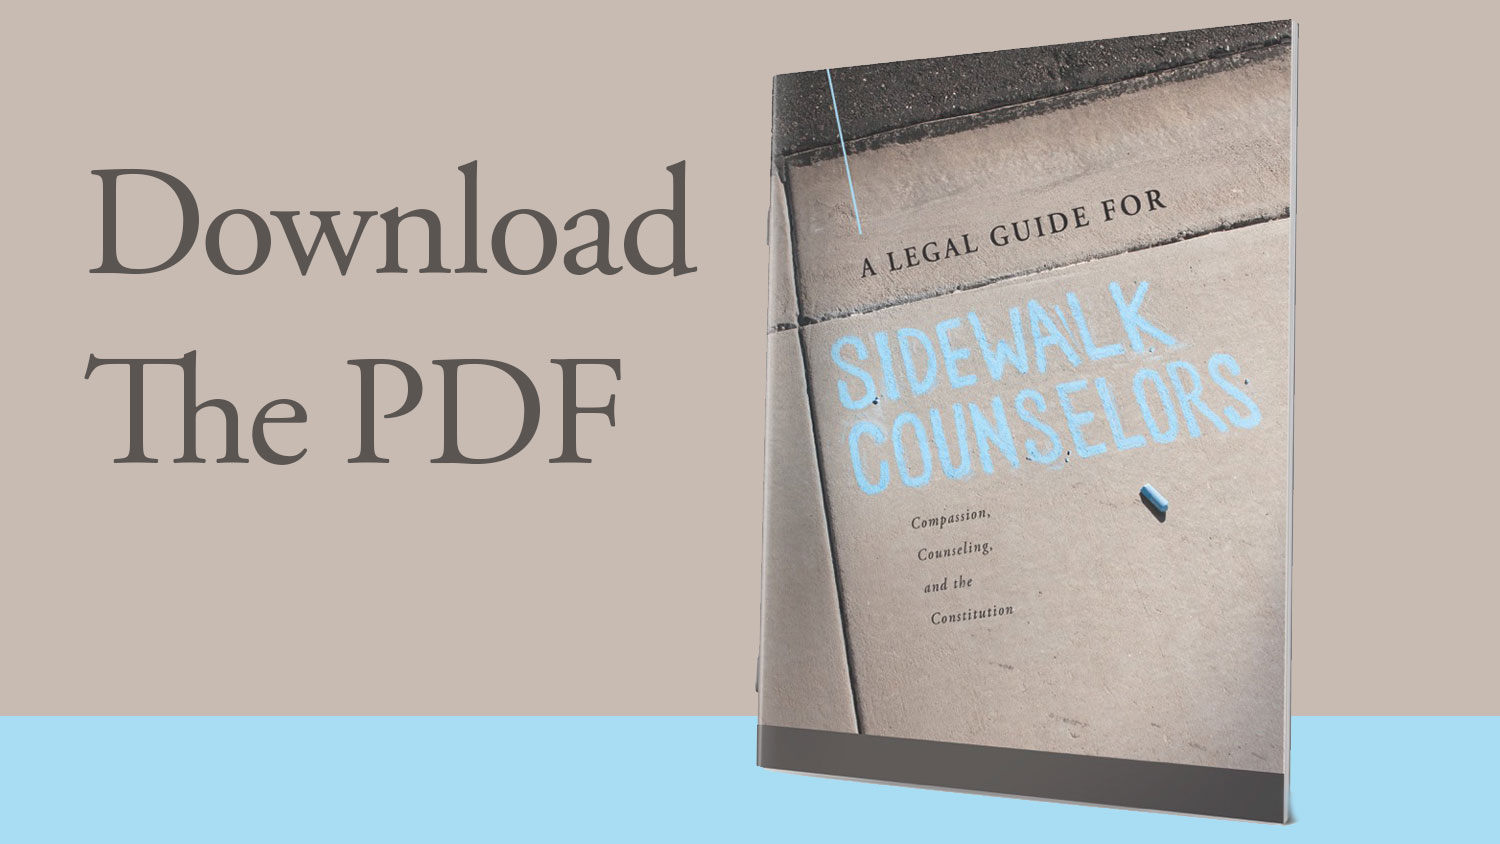 img-pdf-sidewalk-counselors-cover